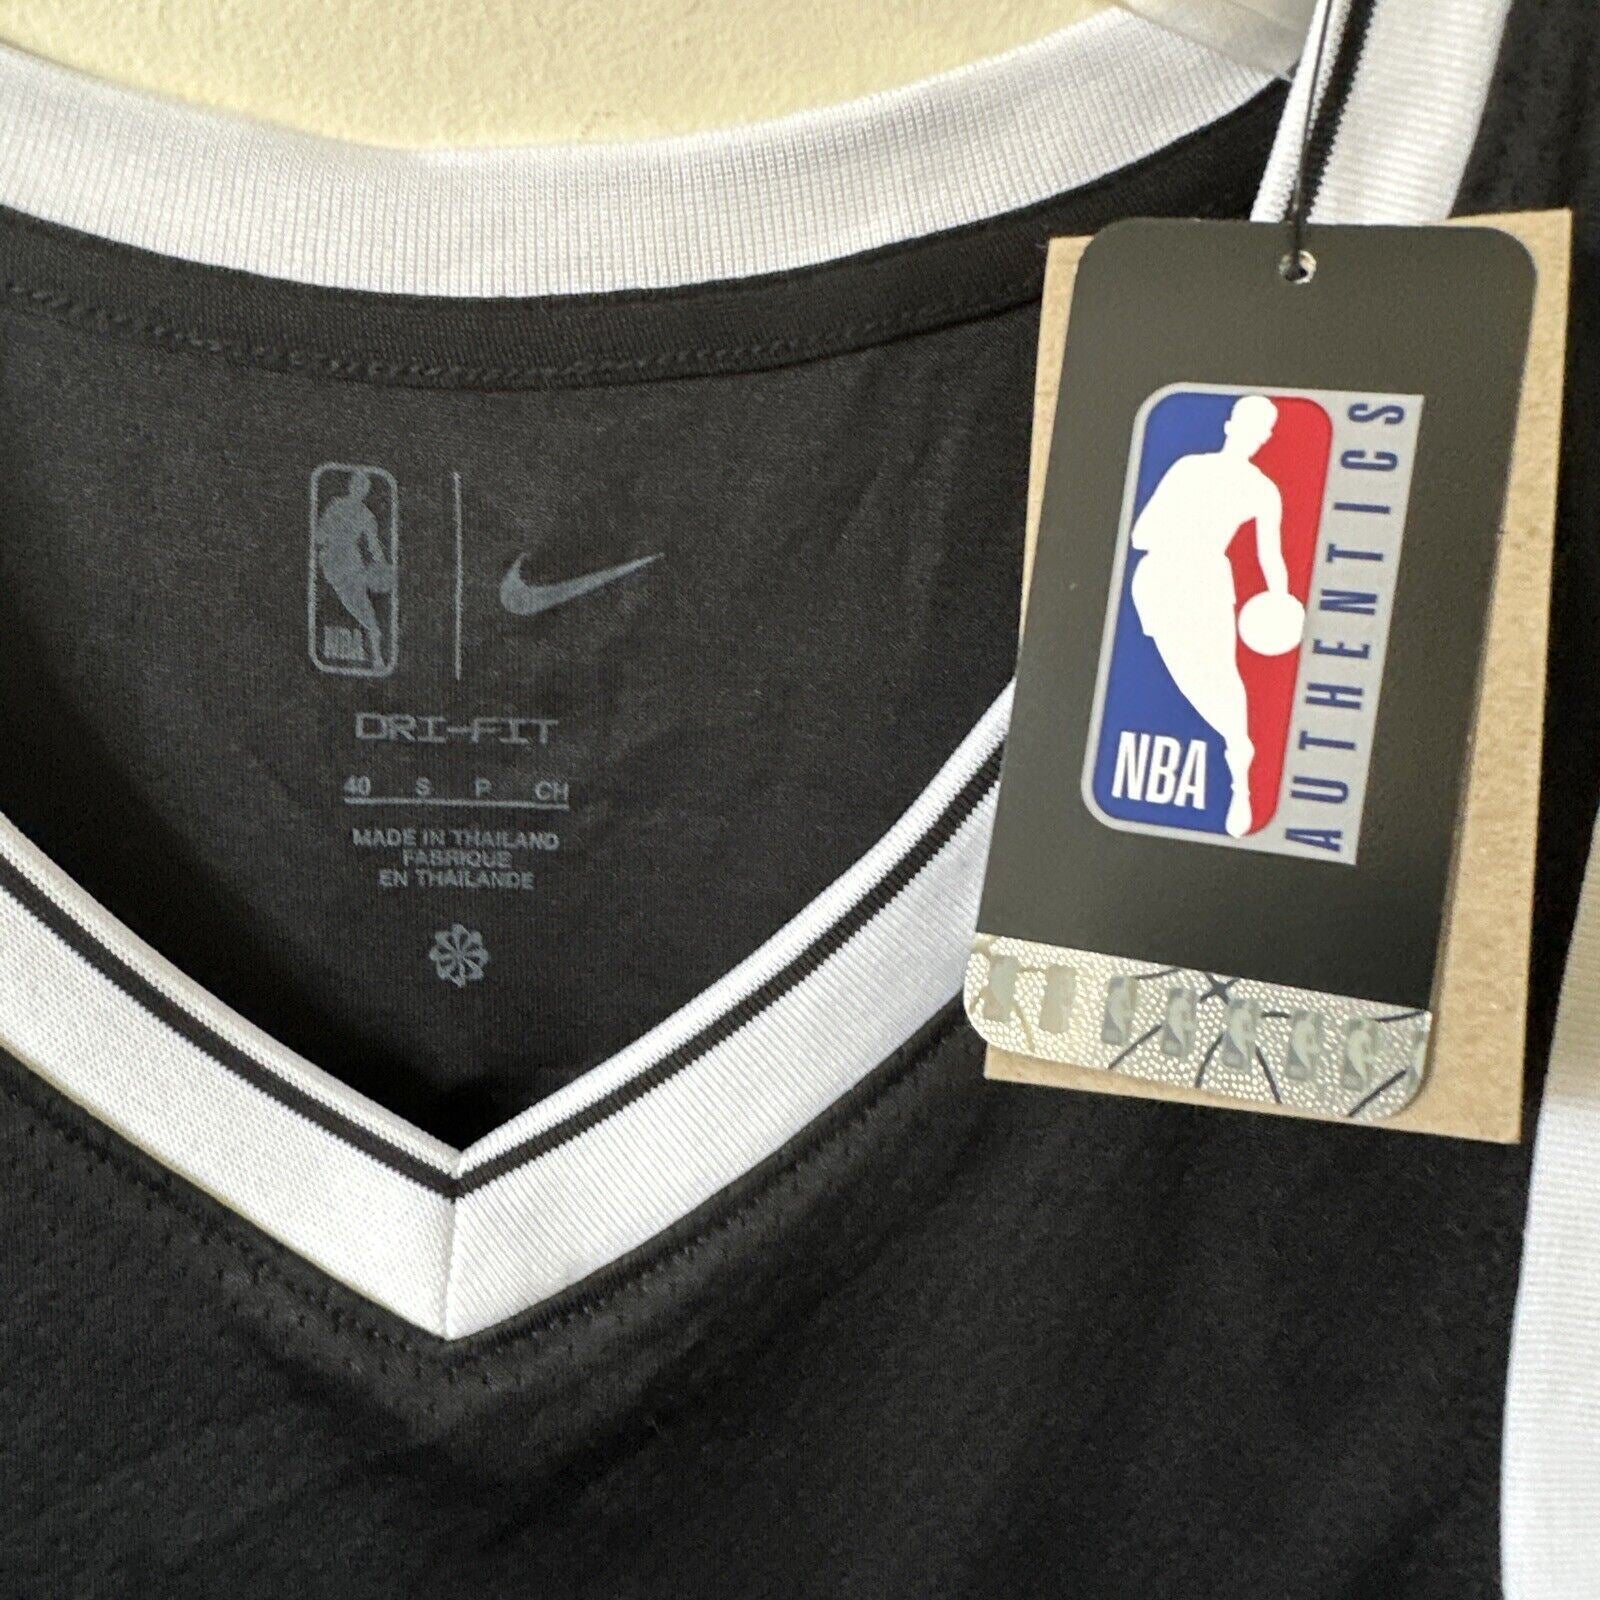 Nike NBA Brooklyn Nets Swingman Edition Jersey GIBBS 31 Men’s Small